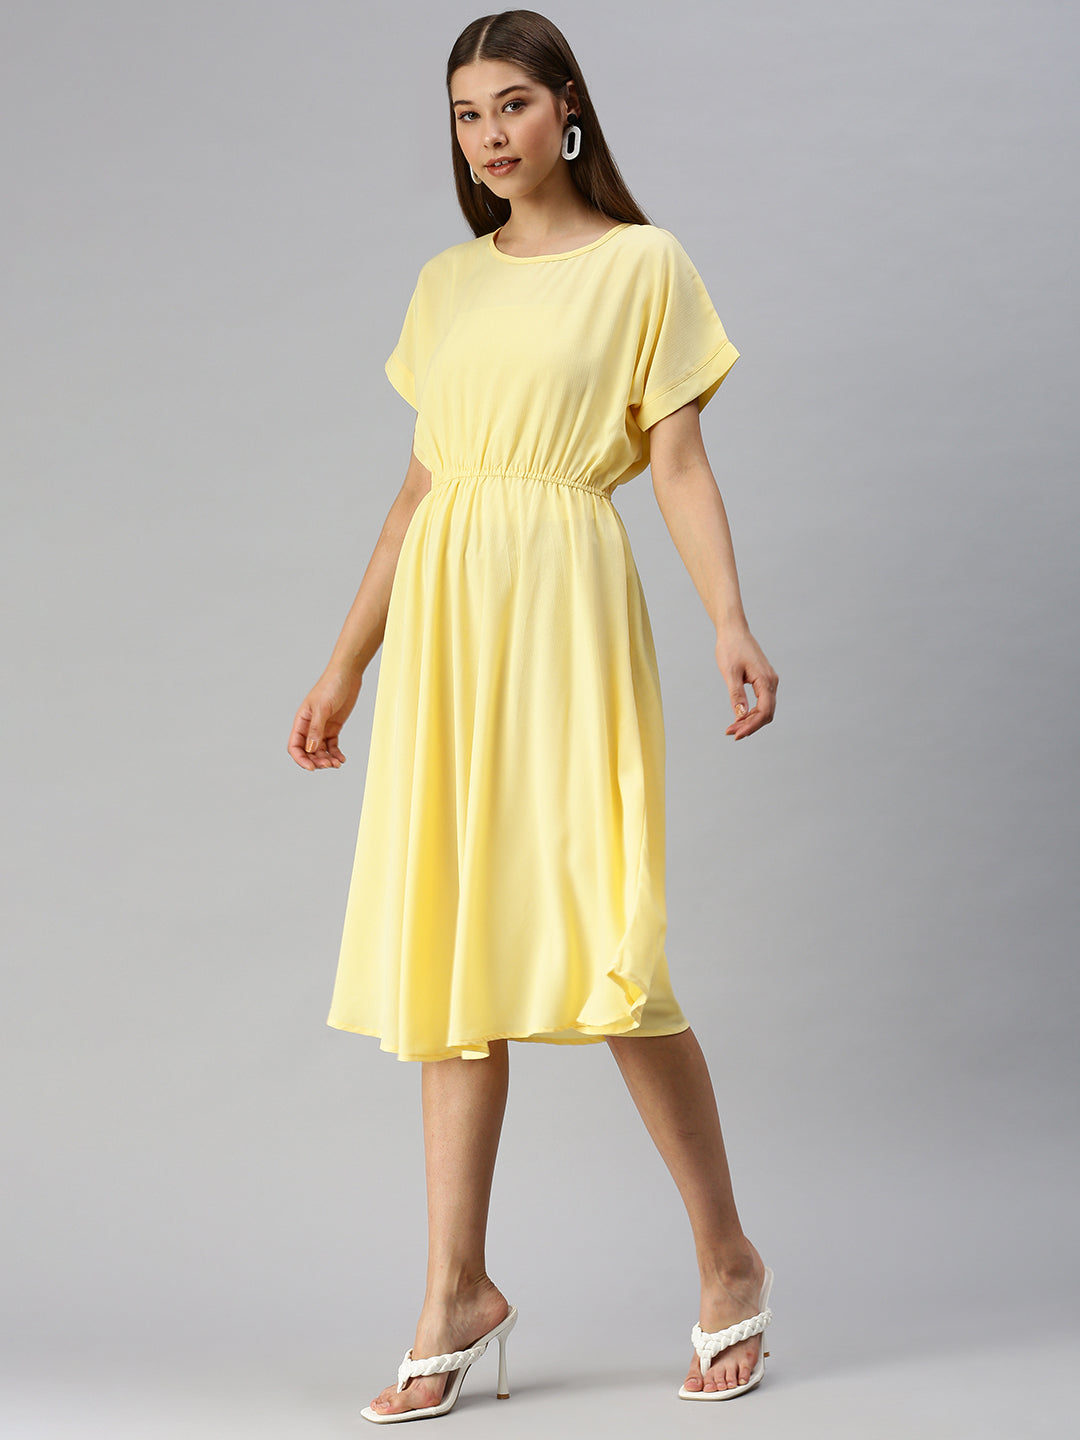 Women Solid A-Line Yellow Dress